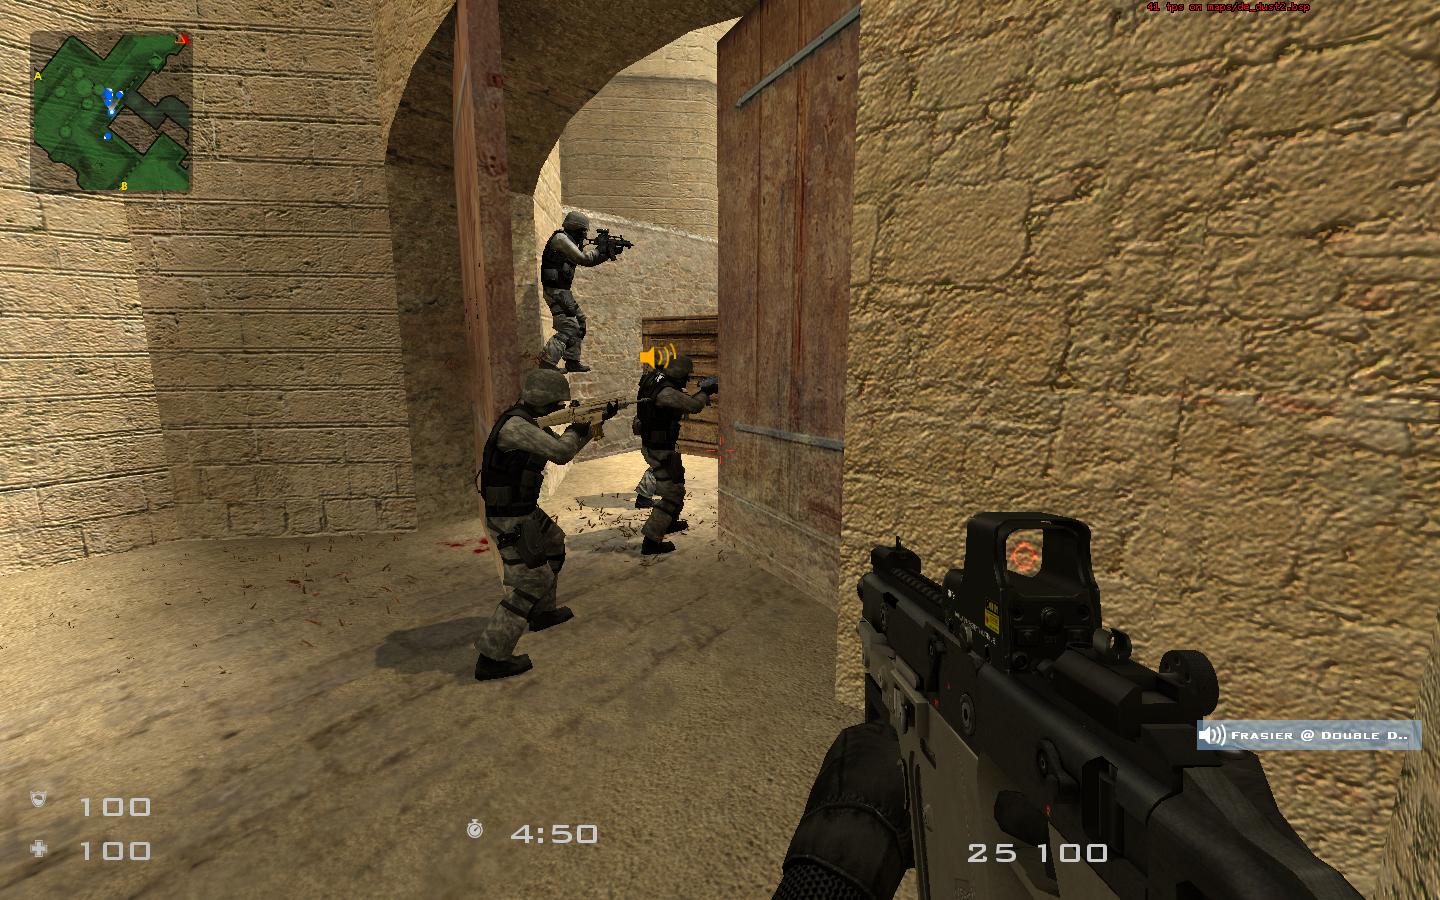 Luno cs 2. Counter Strike Modern Warfare 5. Counter Strike 1.6 Modern Warfare. Контр страйк соурс Модерн варфаер 3. Контр страйк Modern Warfare 3.